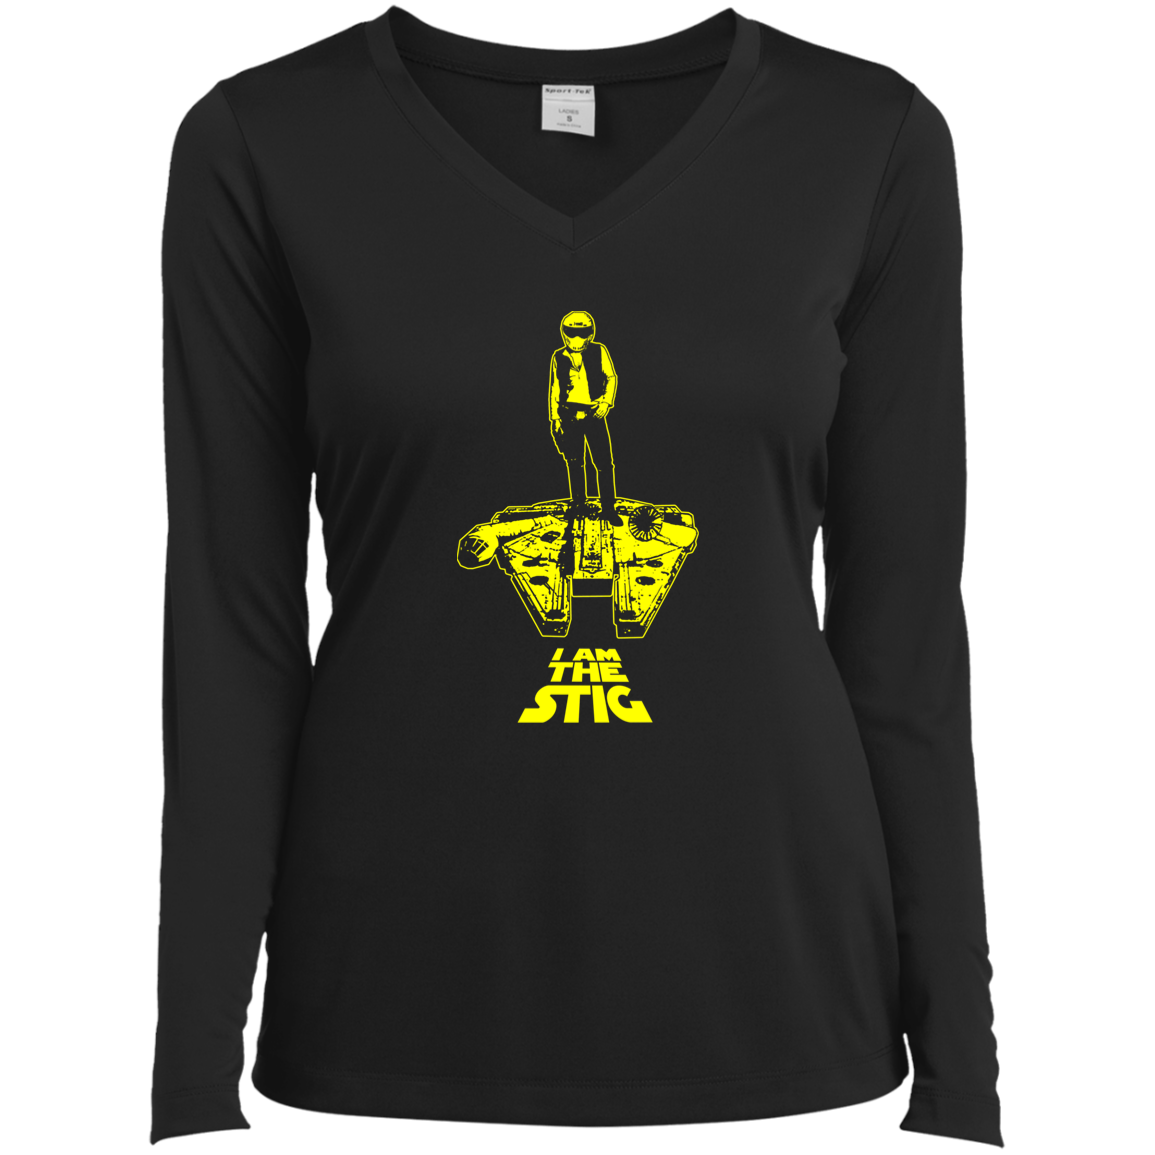 ArtichokeUSA Custom Design. I am the Stig. Han Solo / The Stig Fan Art. Ladies’ Long Sleeve Performance V-Neck Tee